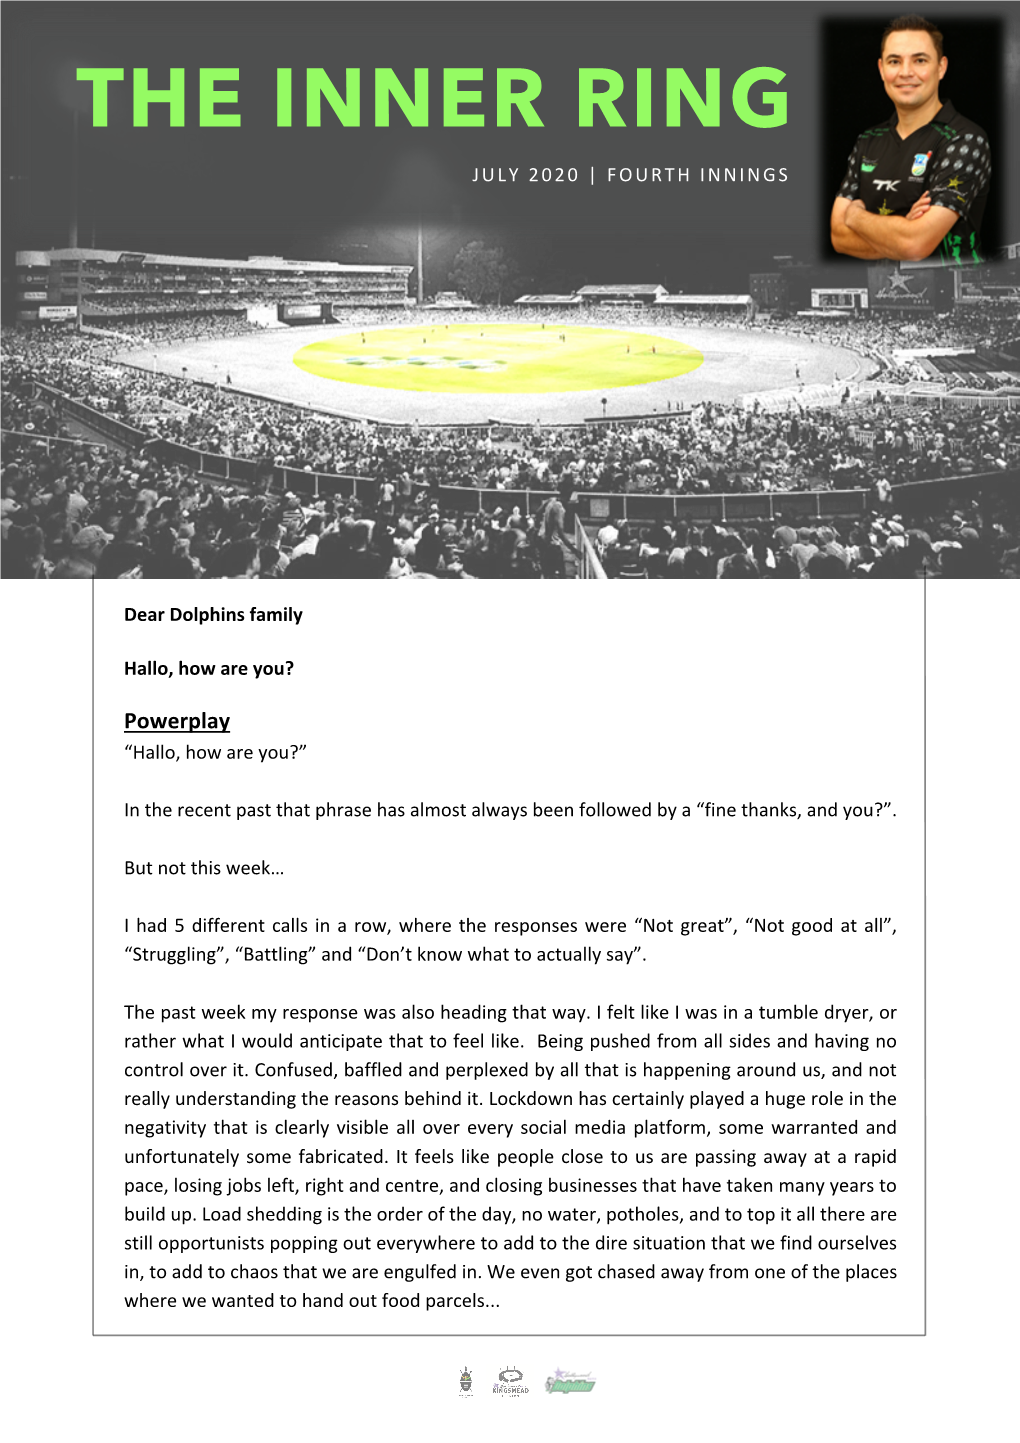 KZN Cricket the Inner Ring 24 July 2020 Fourth